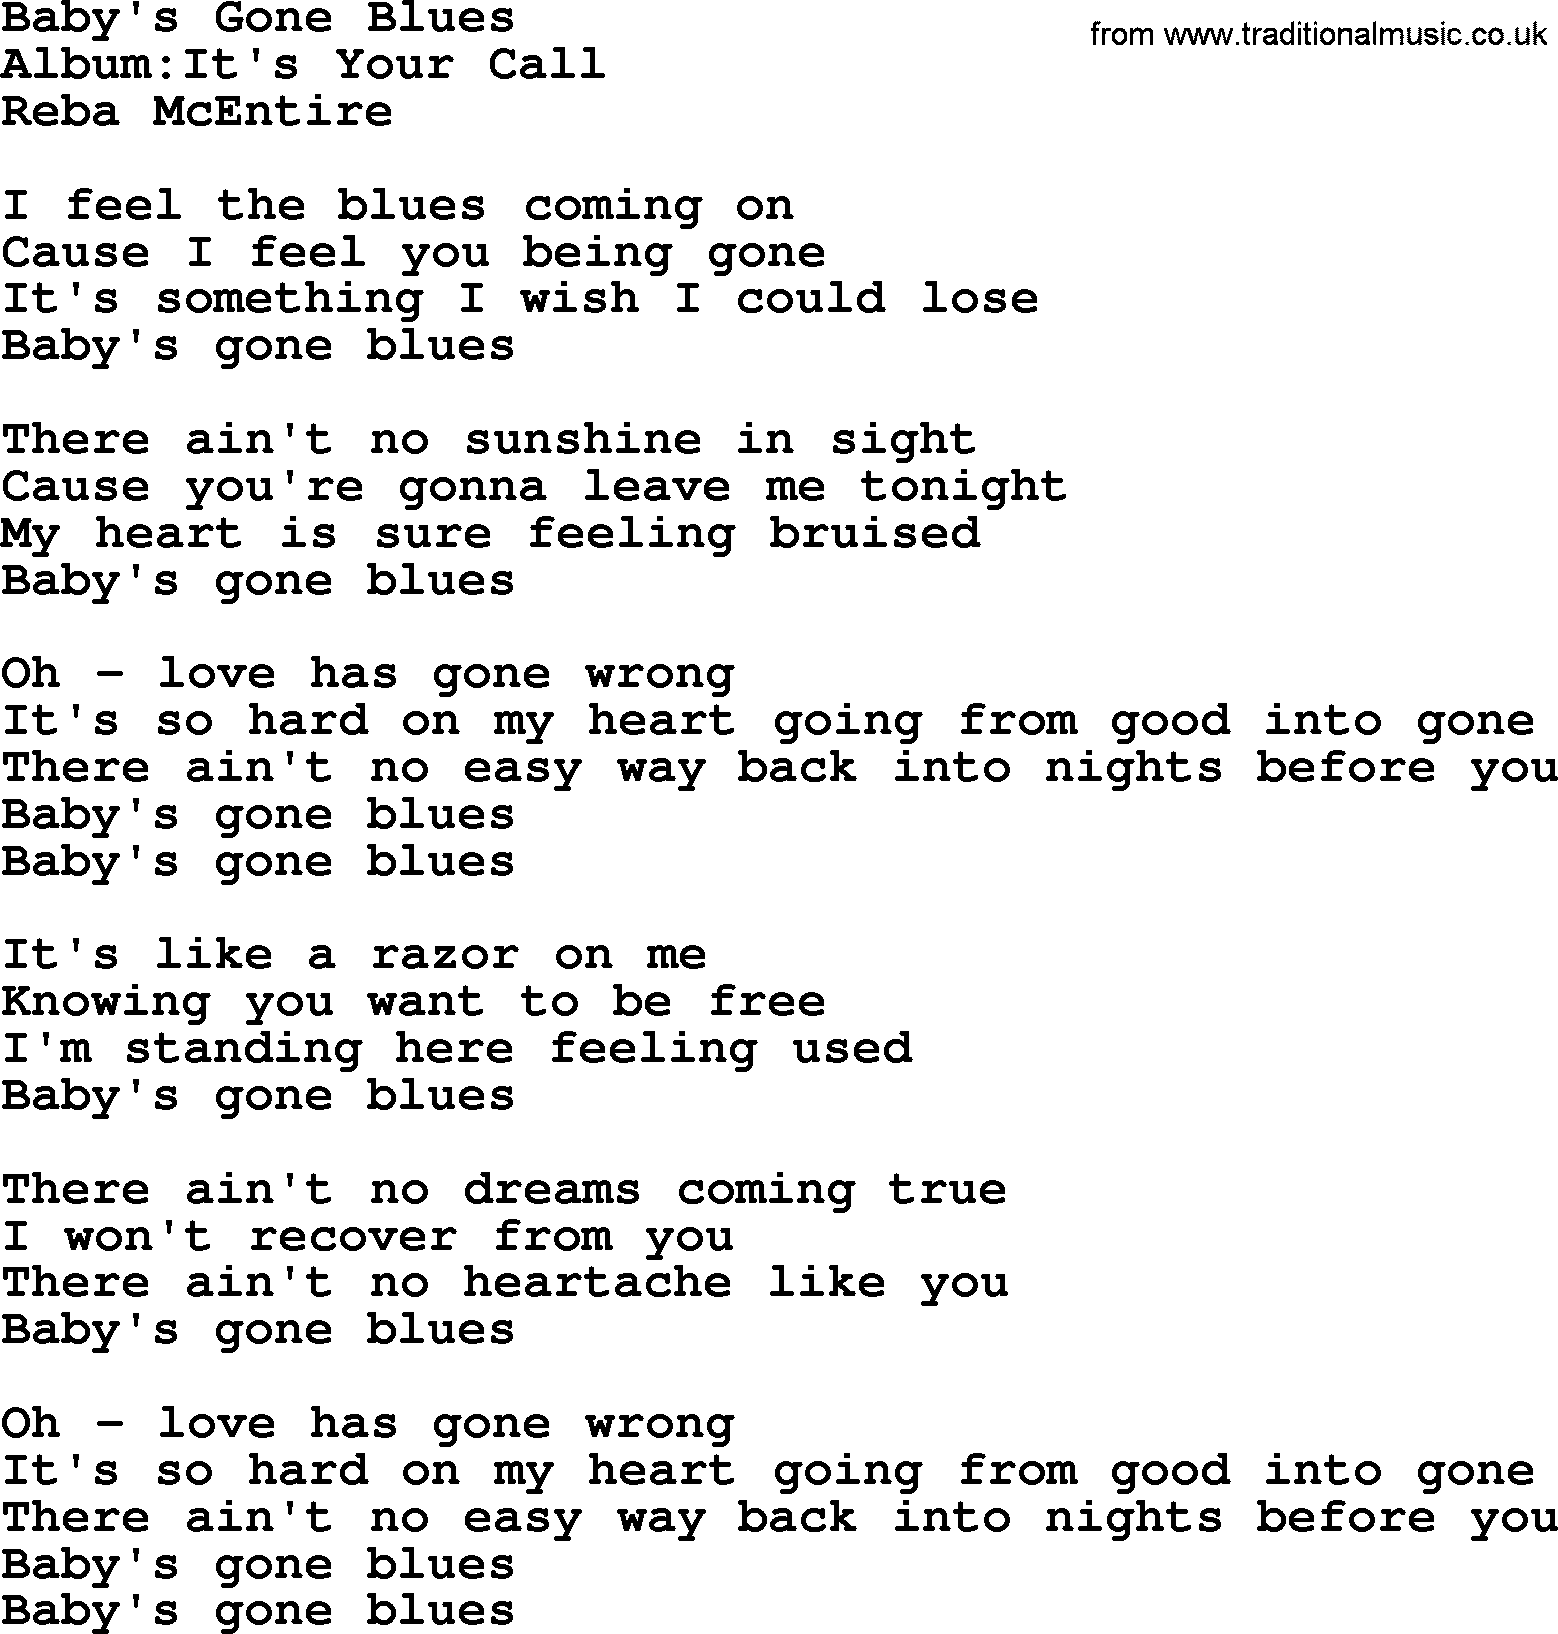 Reba McEntire song: Baby's Gone Blues lyrics